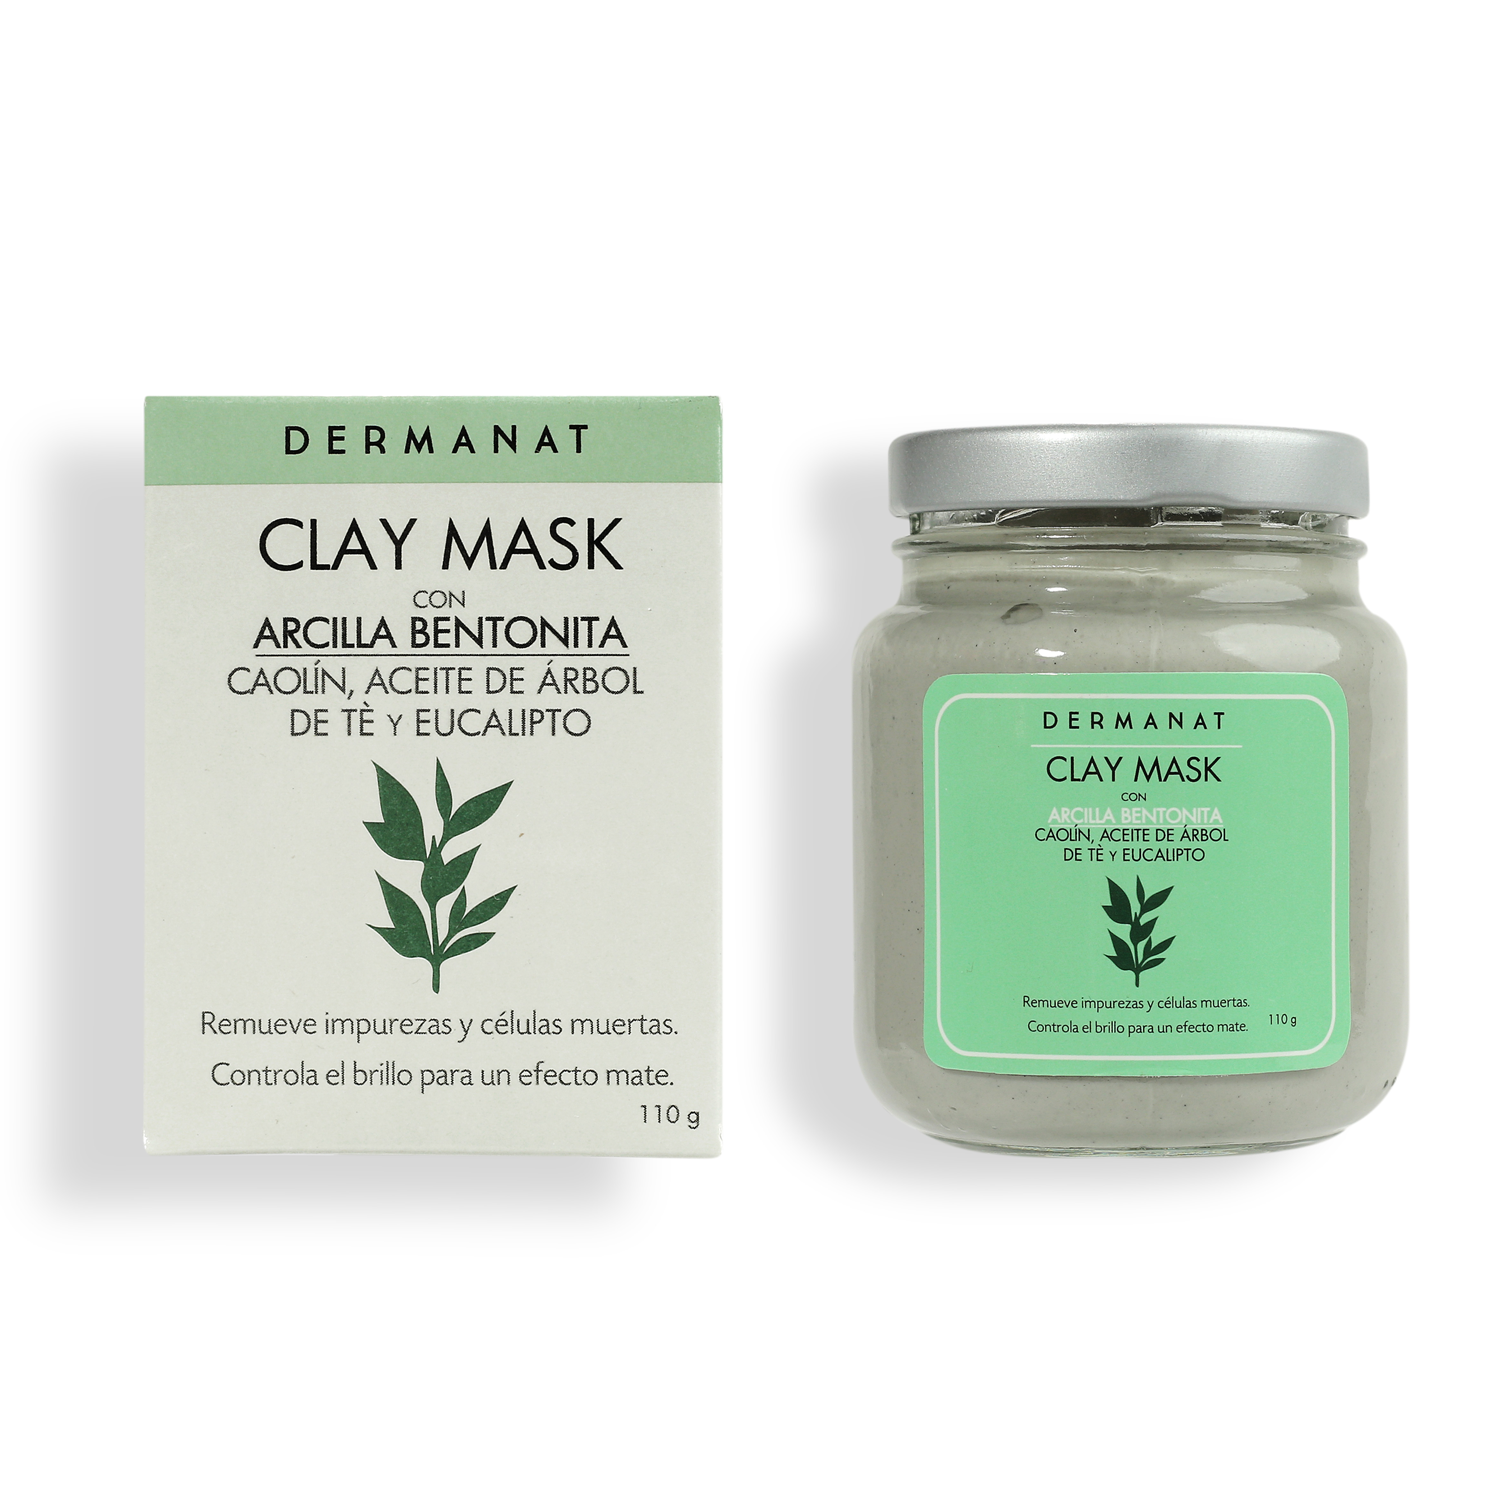 main product clay mask